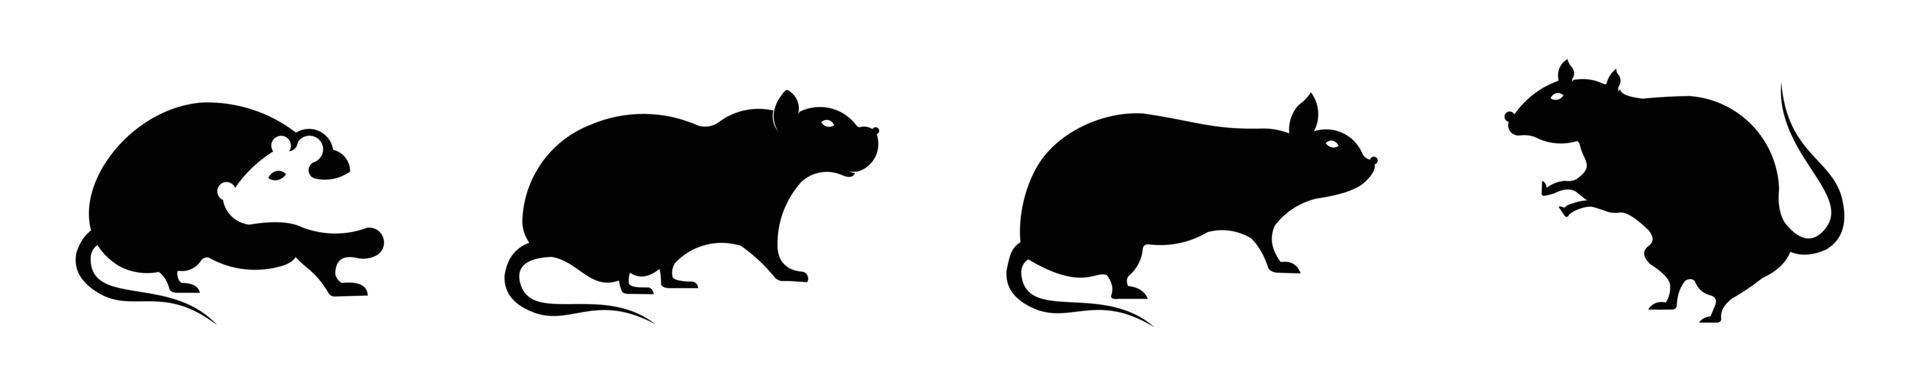 conjunto de siluetas de ratas, vector de icono de silueta de ratón para logotipo